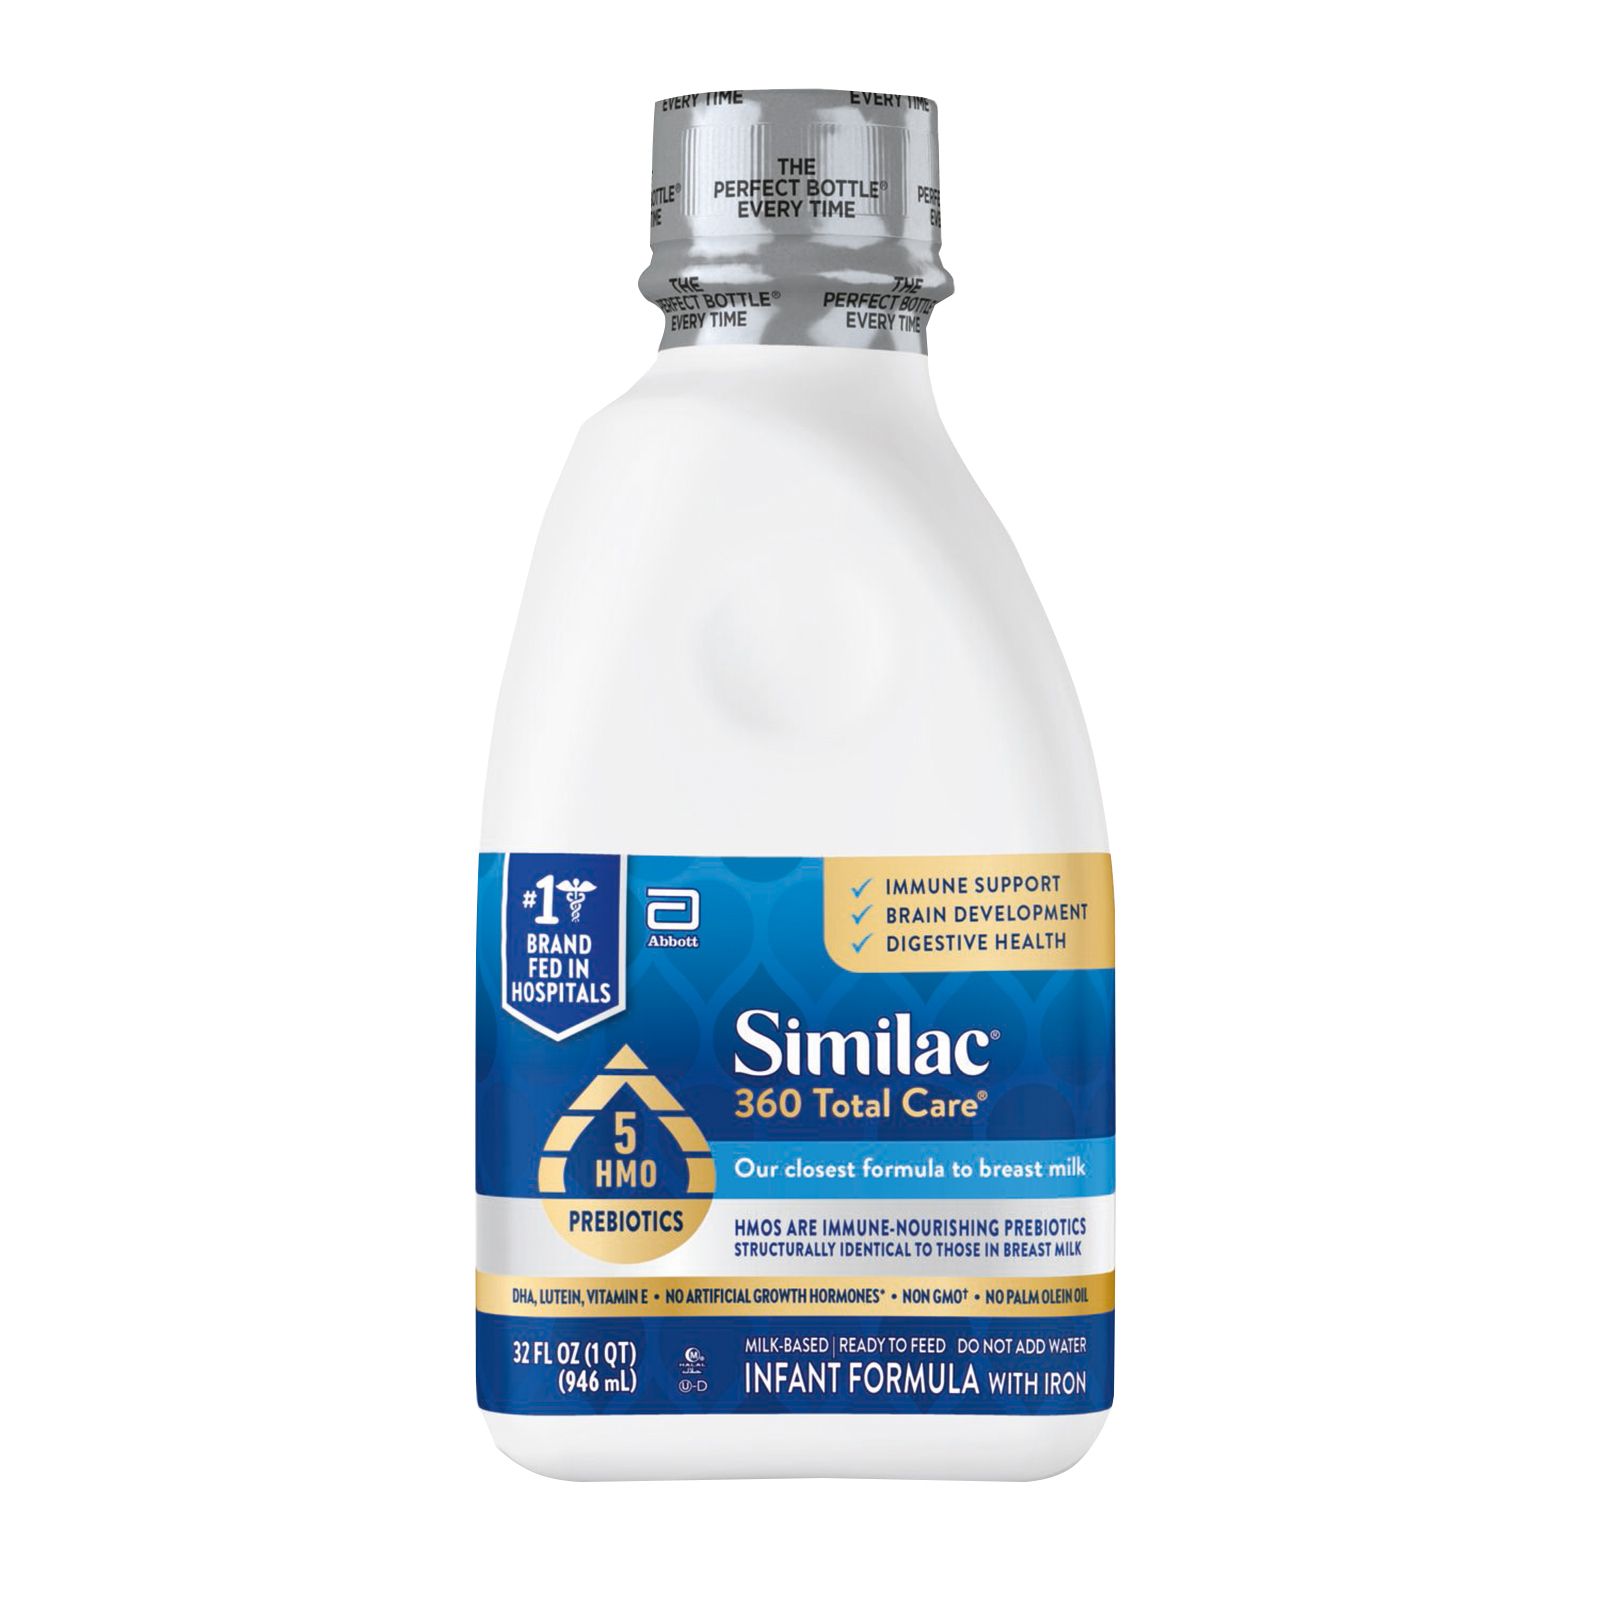 Similac 360 Total Care Infant Formula Ready-to-Feed Bottle, 6 pk./32 fl. oz.